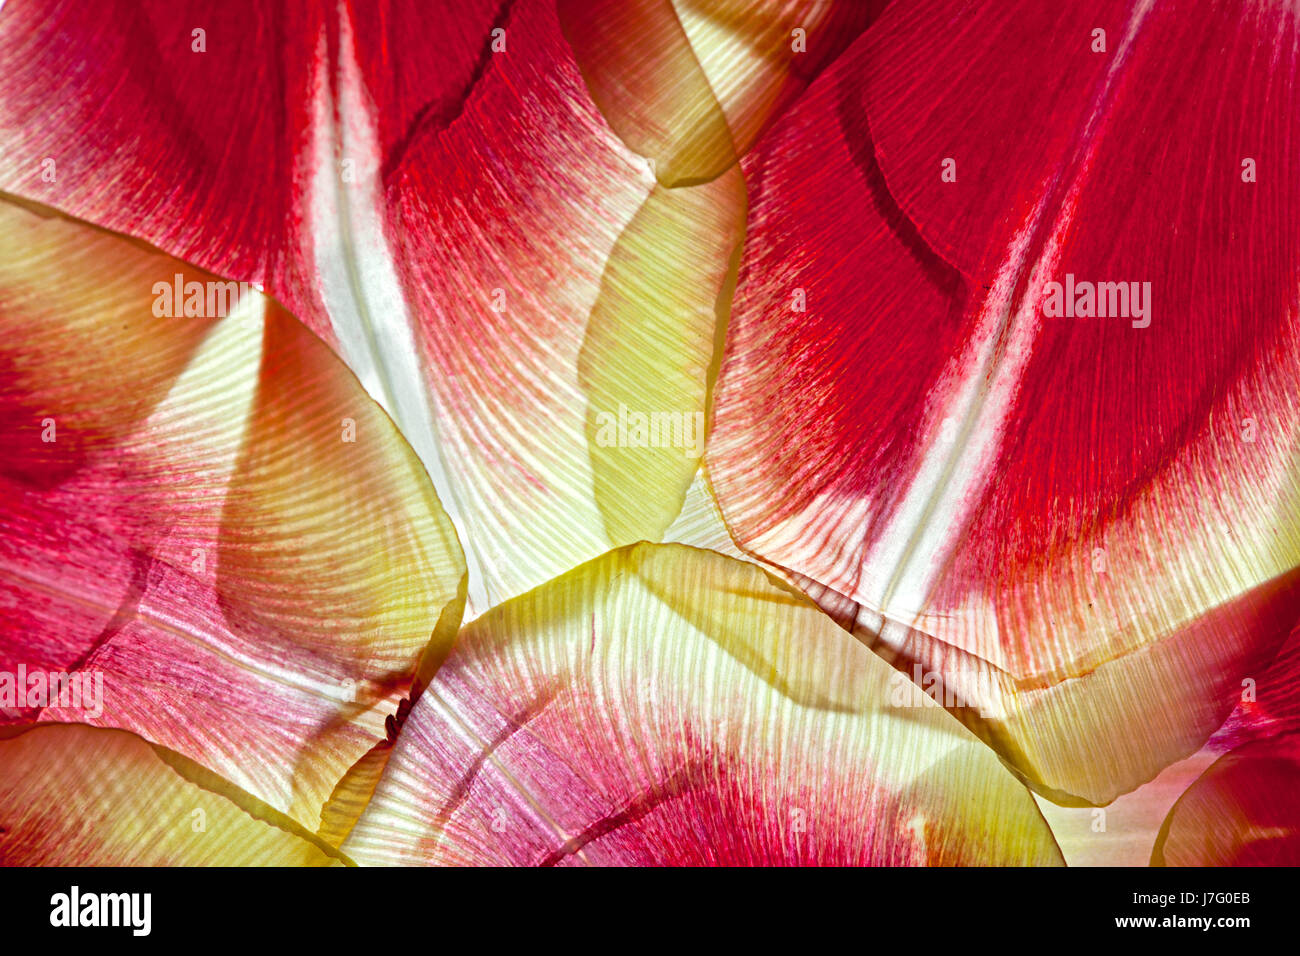 bloom blossom flourish flourishing flower plant tulip petals petal page sheet Stock Photo